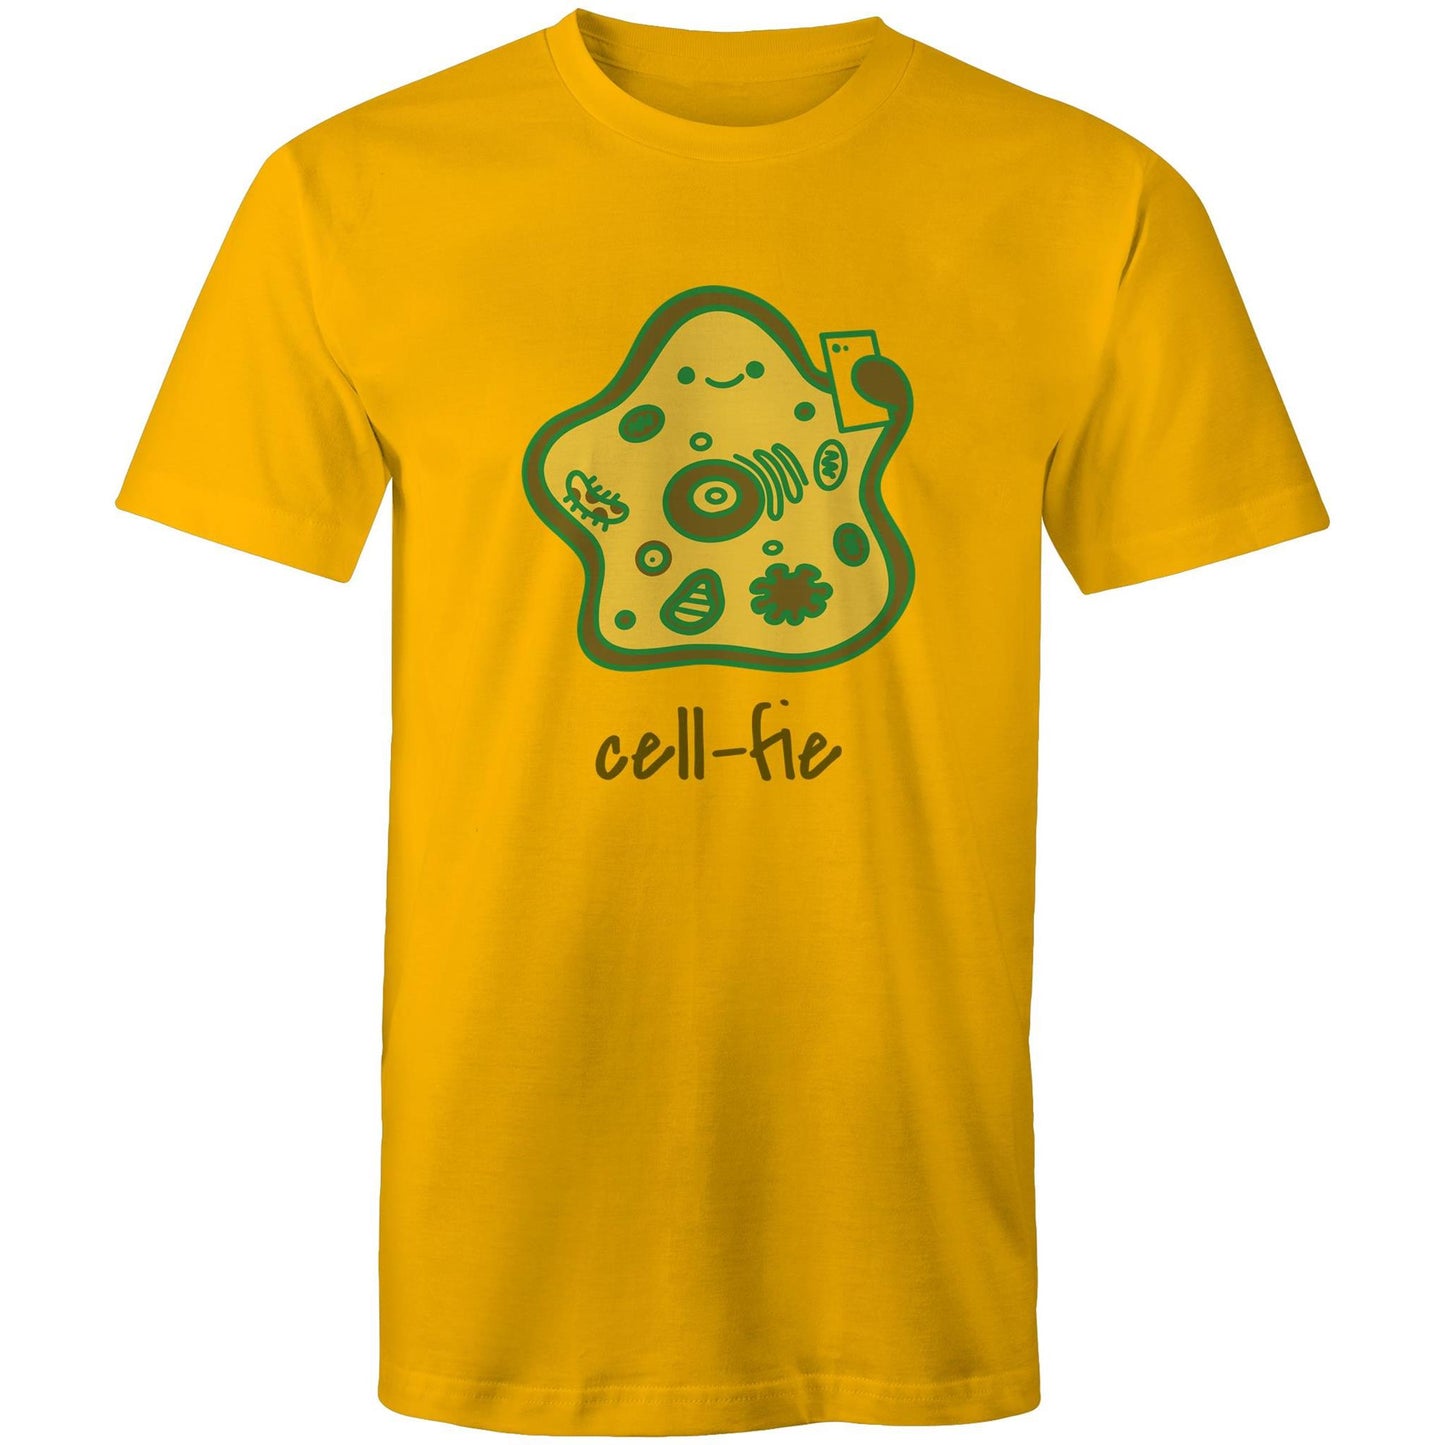 Cell-fie - Mens T-Shirt Gold Mens T-shirt Science